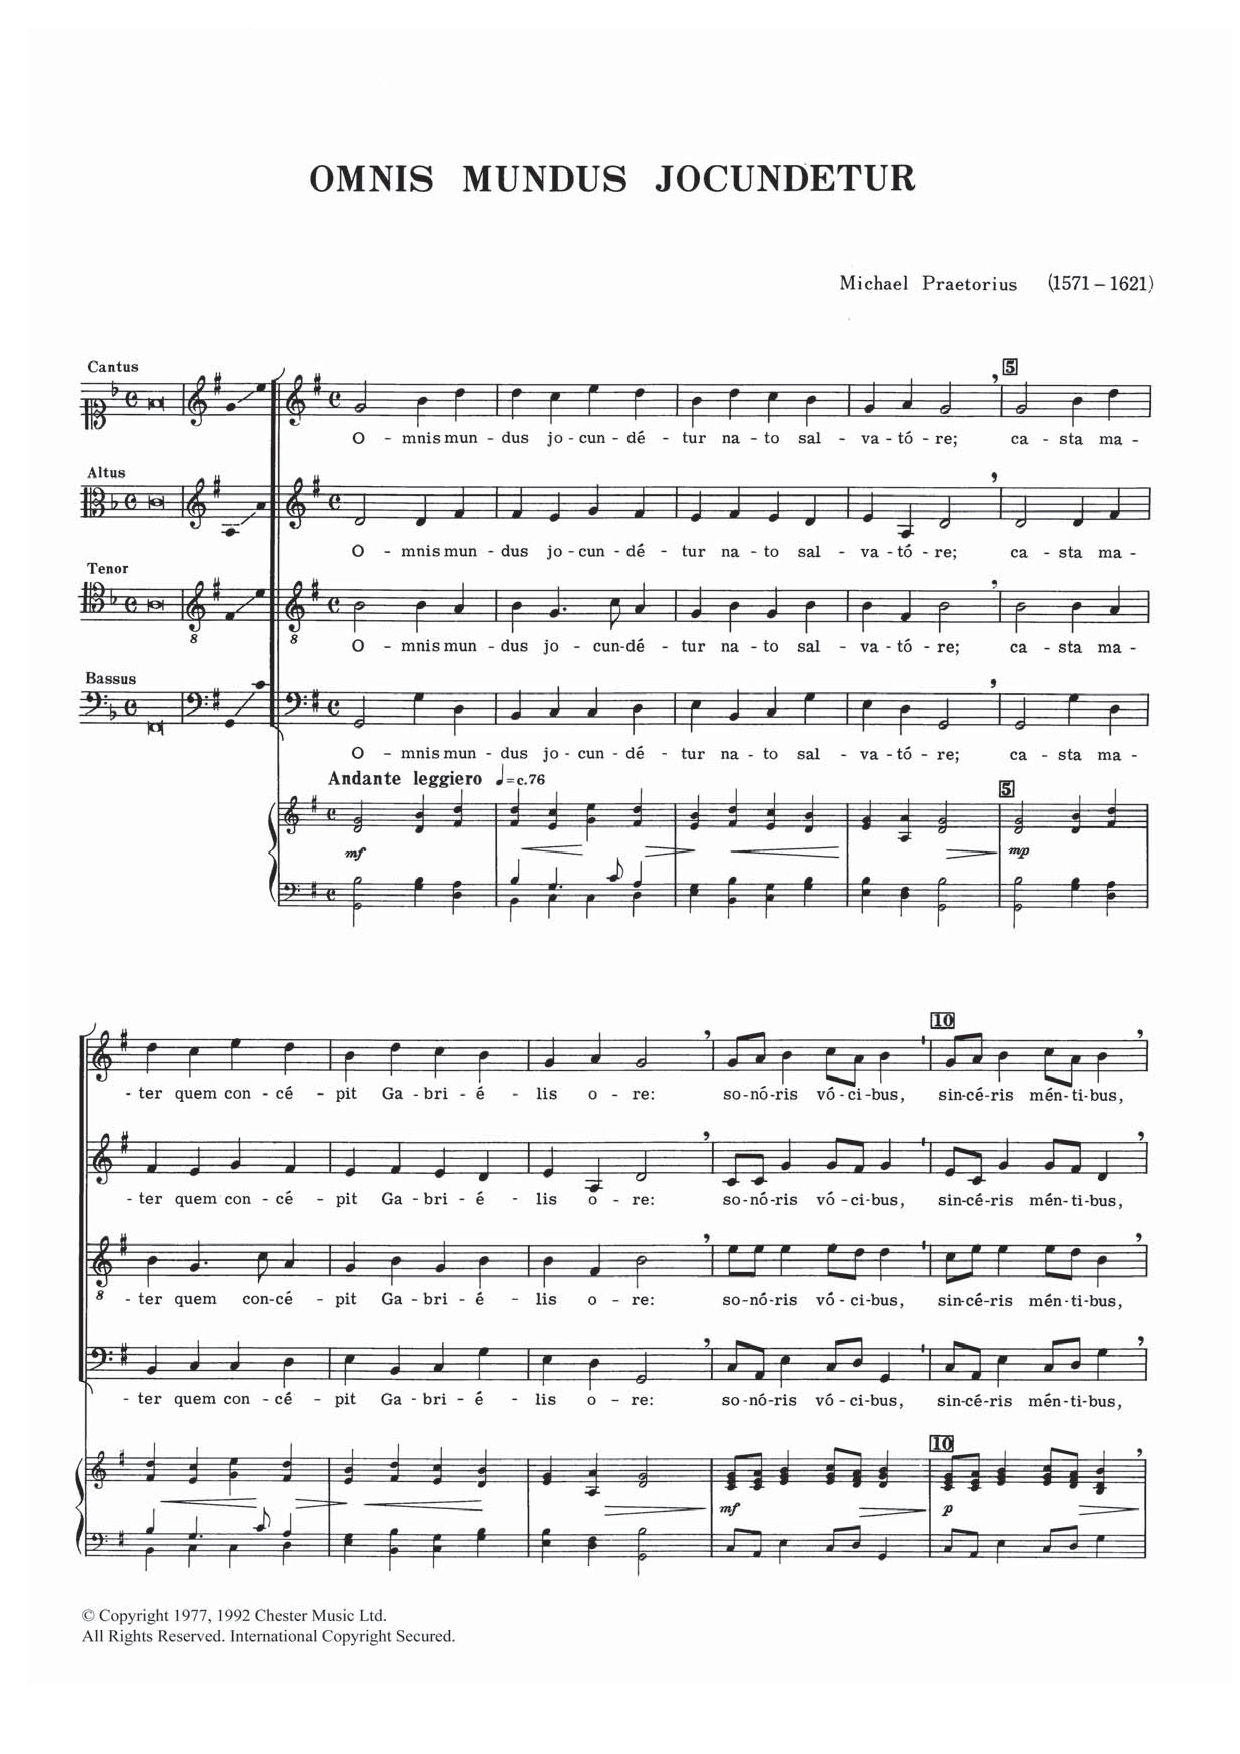 Download Michael Praetorius Omnis Mundus Jocundetur Sheet Music and learn how to play SATB PDF digital score in minutes